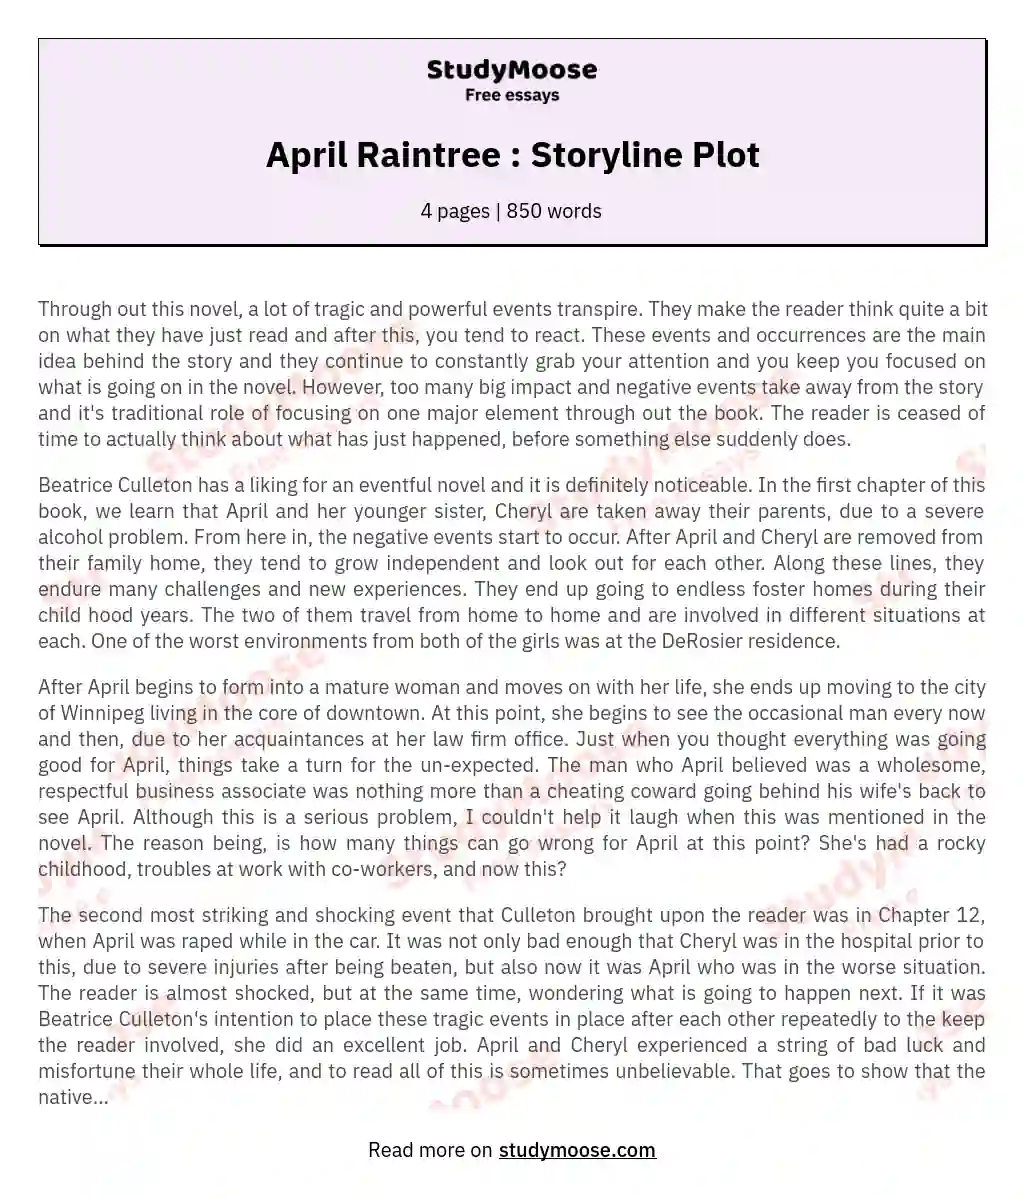 April Raintree : Storyline Plot essay